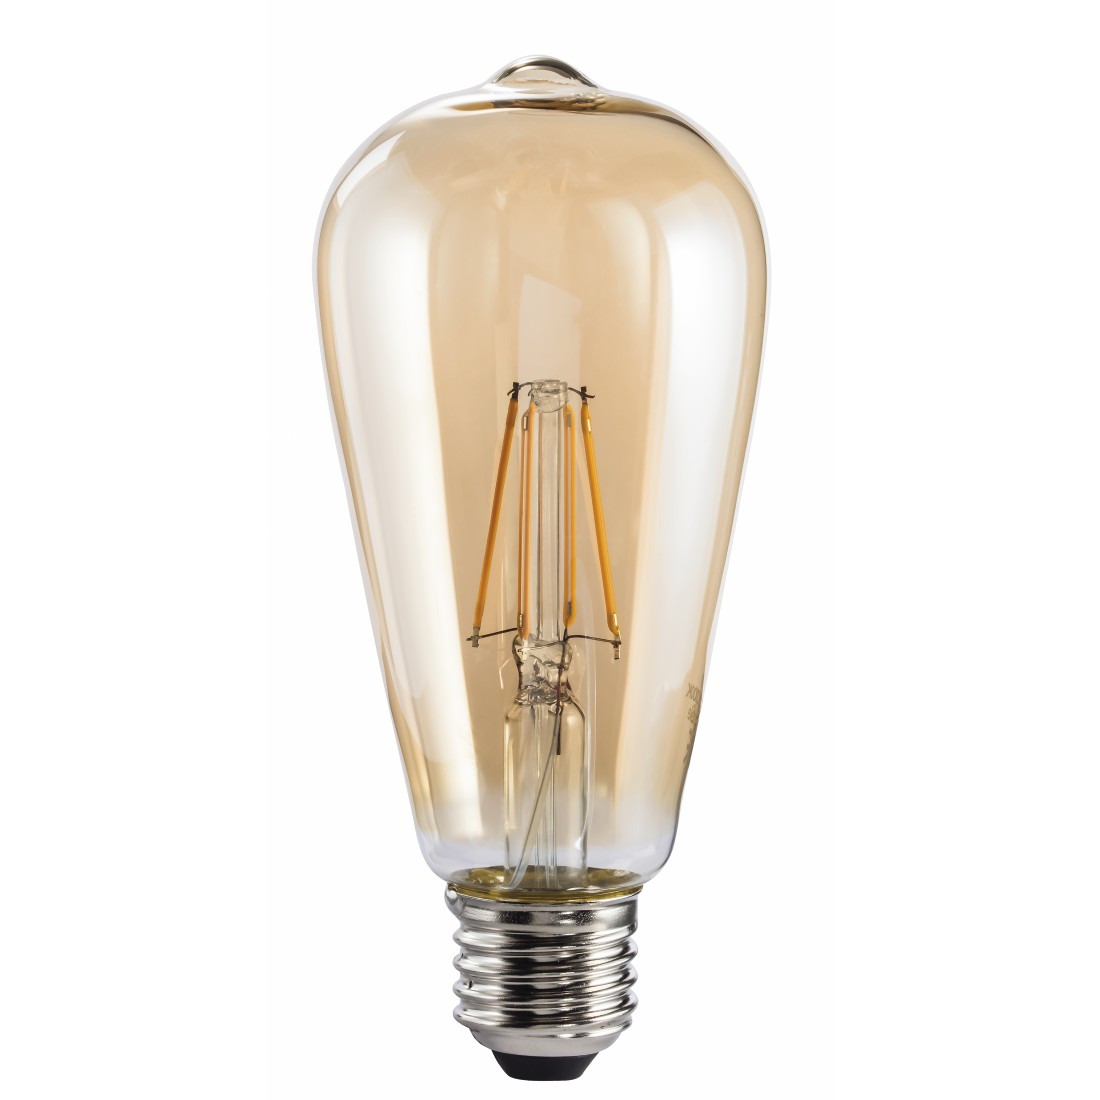 abx High-Res Image - Xavax, Fil LED, E27, 685lm rempl. 53W, lampe vintage régl., ambre, blc chd